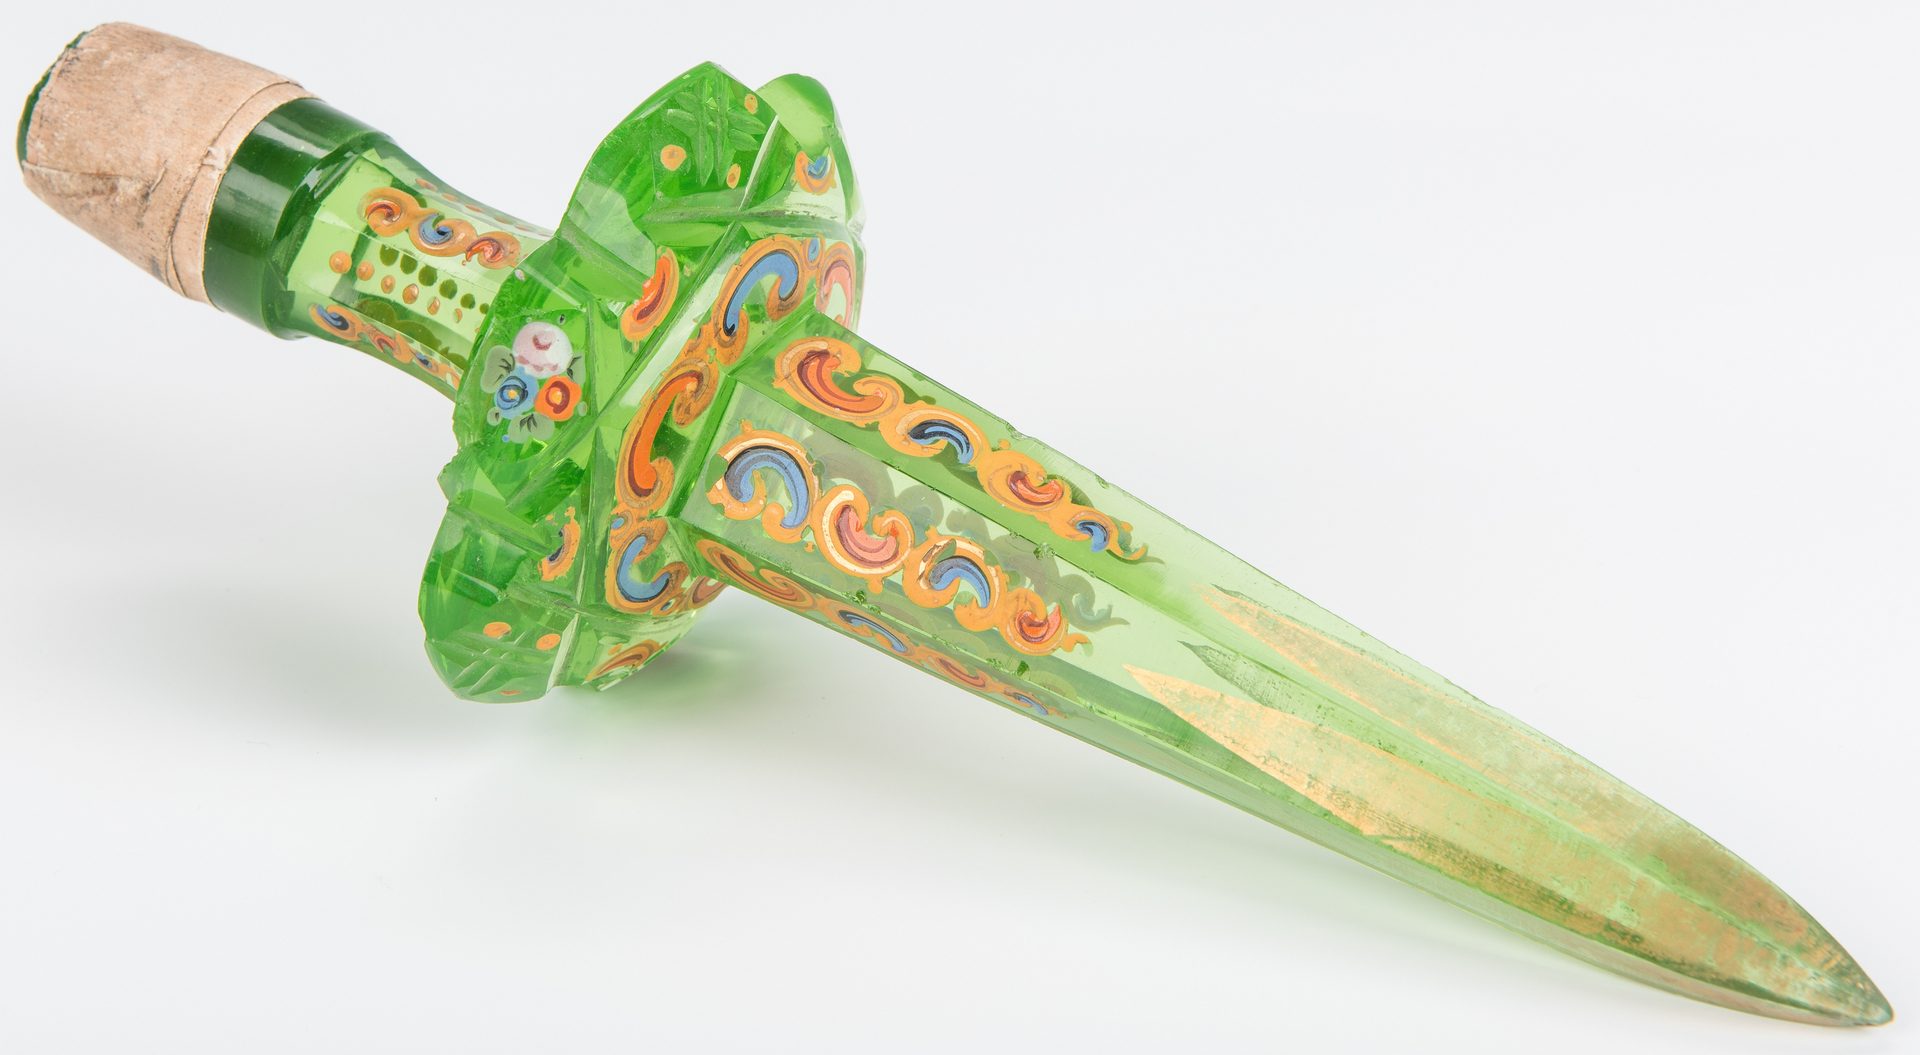 Lot 227: 2 Bohemian Art Glass Decanters